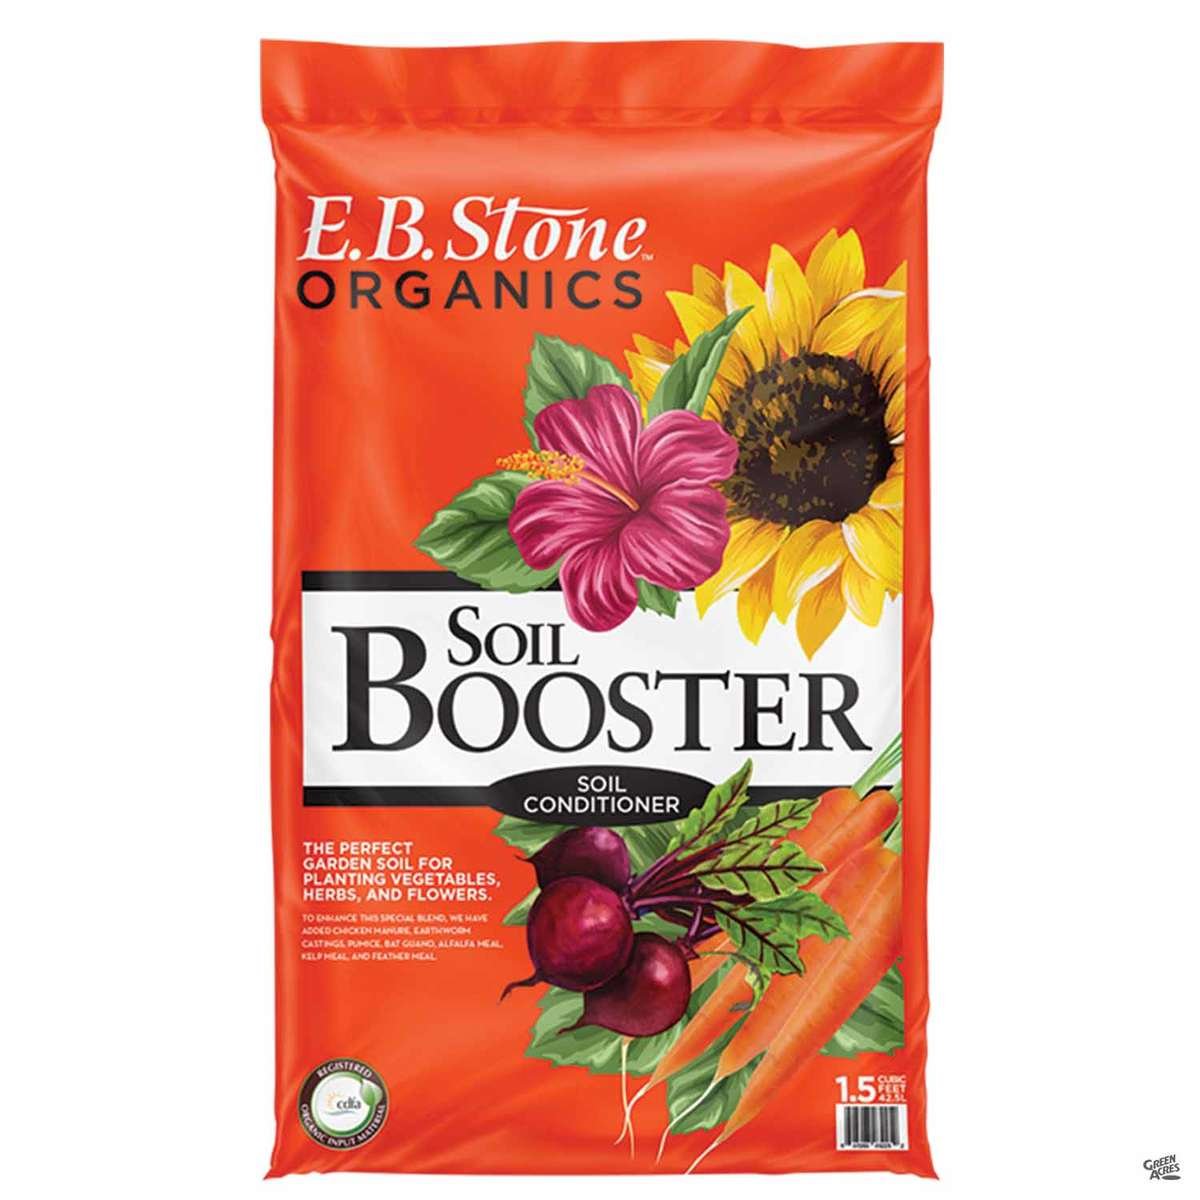 E.B. Stone Organics Soil Booster